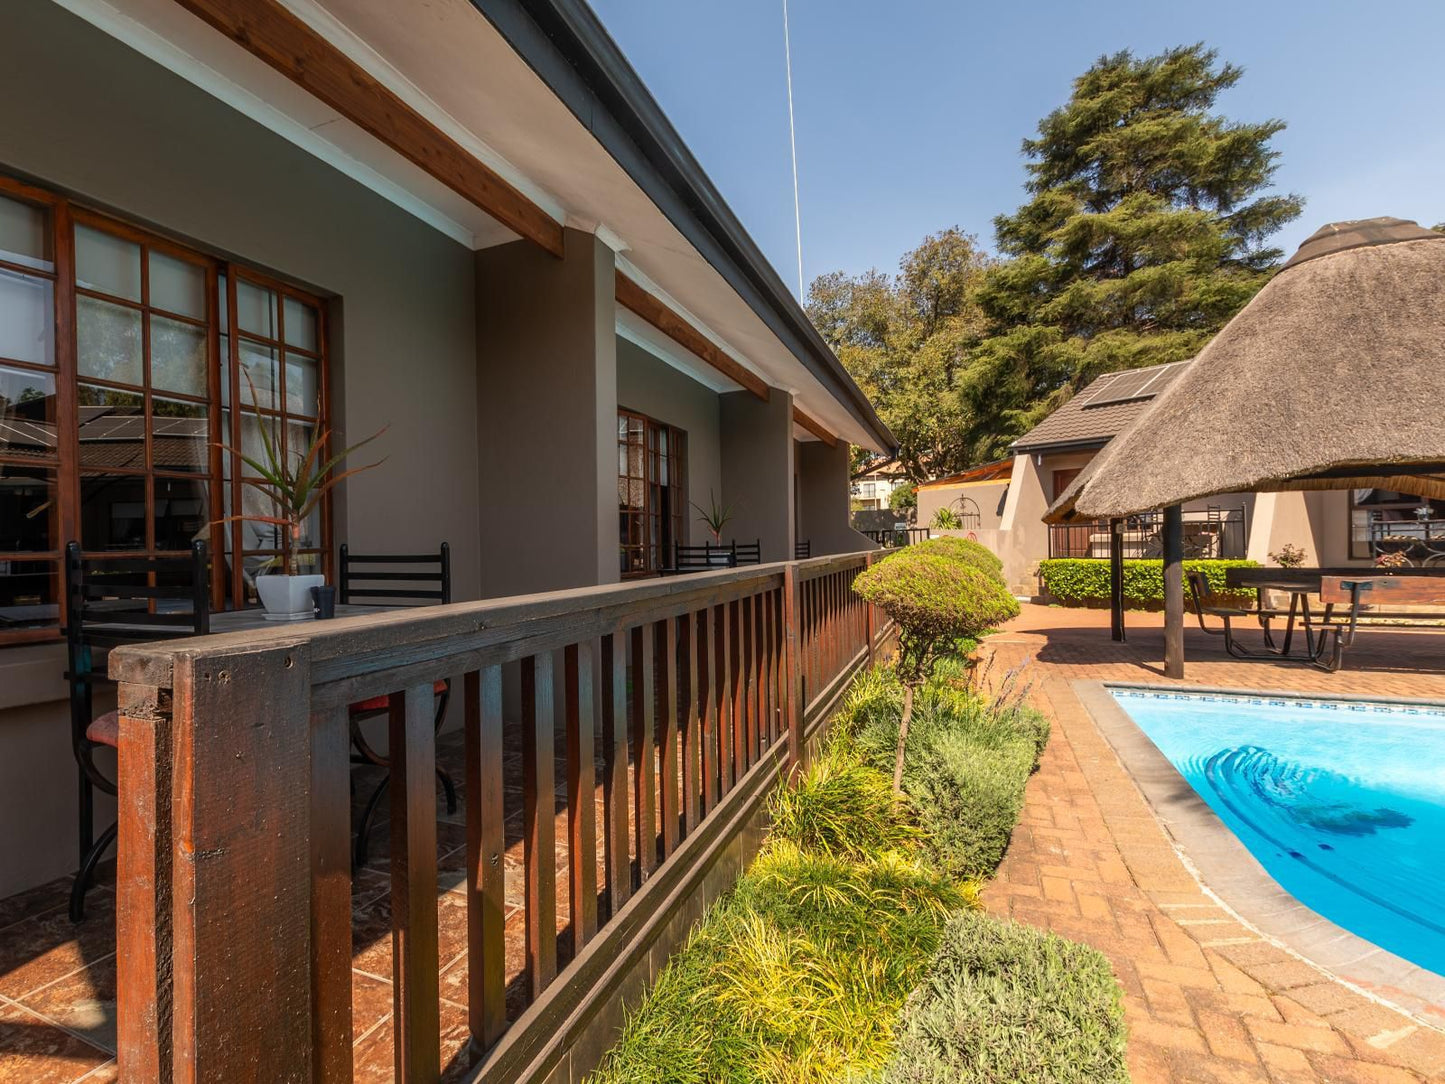 Diamond Rose Guest House Middelburg Mpumalanga Mpumalanga South Africa House, Building, Architecture, Swimming Pool